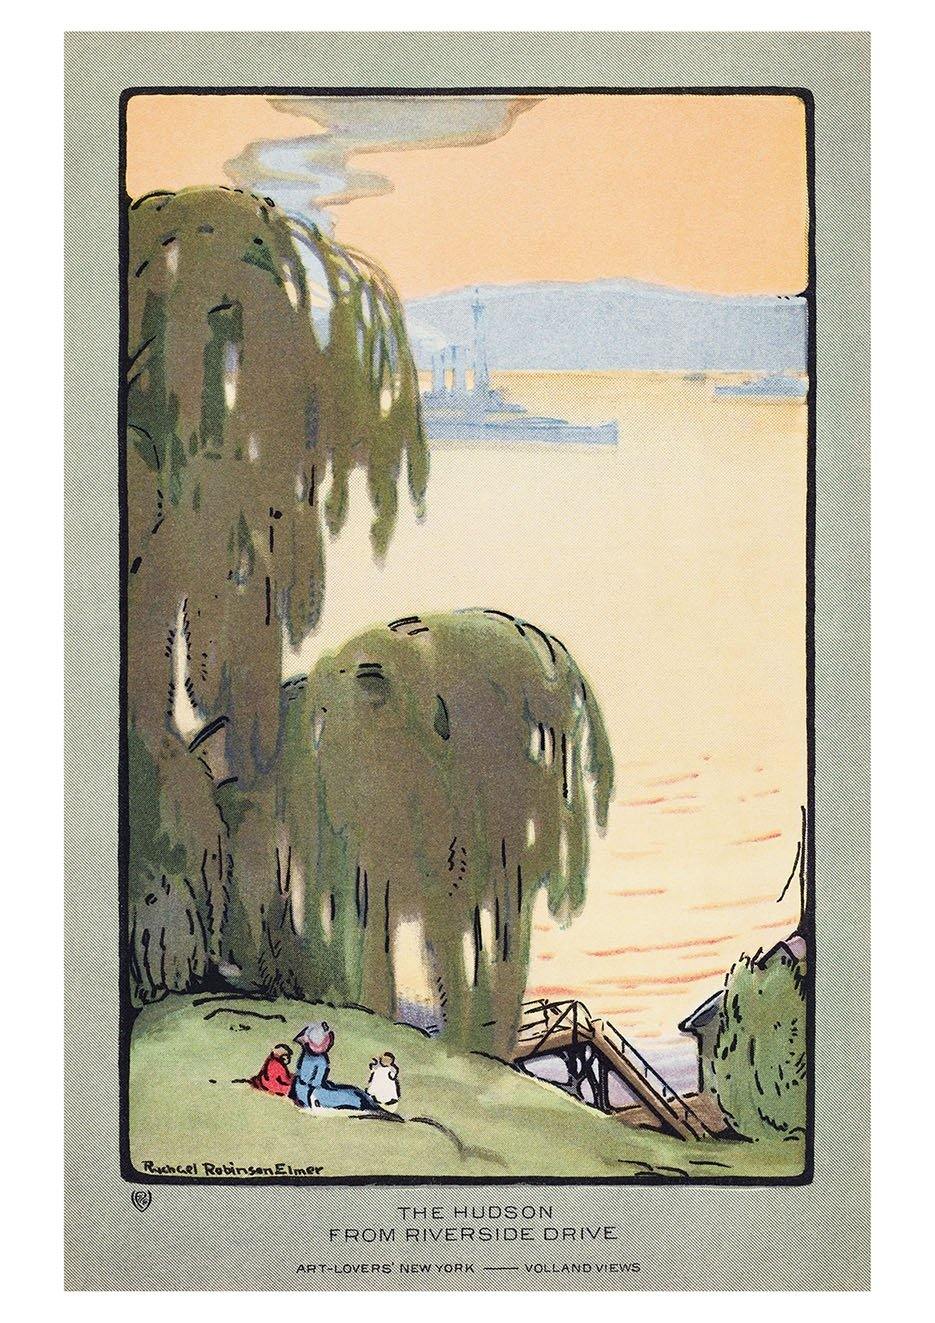 NEW YORK PRINT: The Hudson From Riverside Drive, by Rachael Robinson Elmer - Pimlico Prints